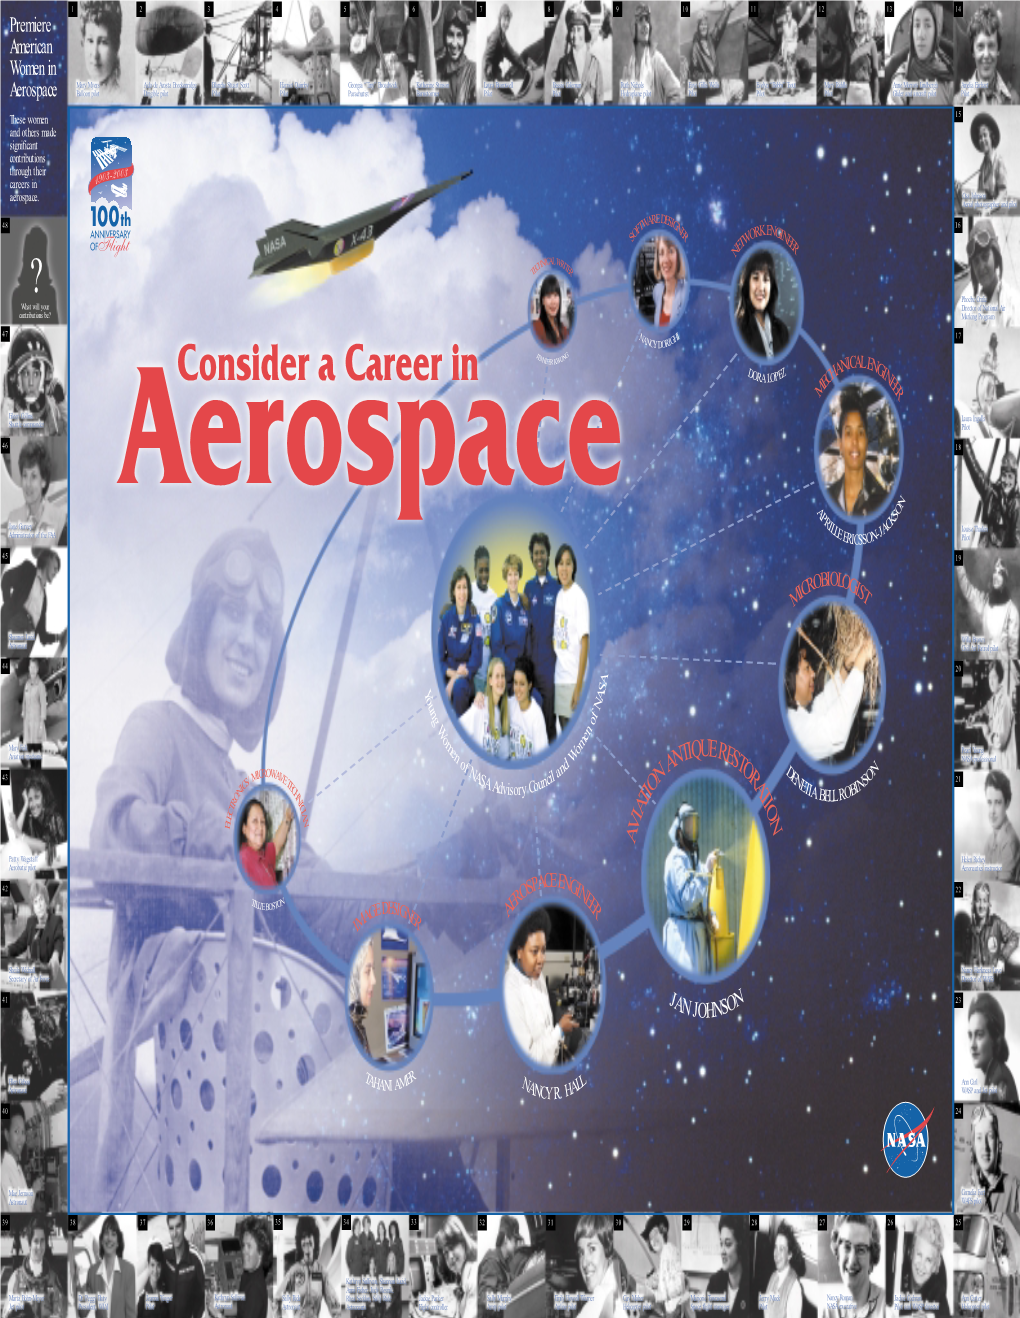 Consider a Career in Aerospace”